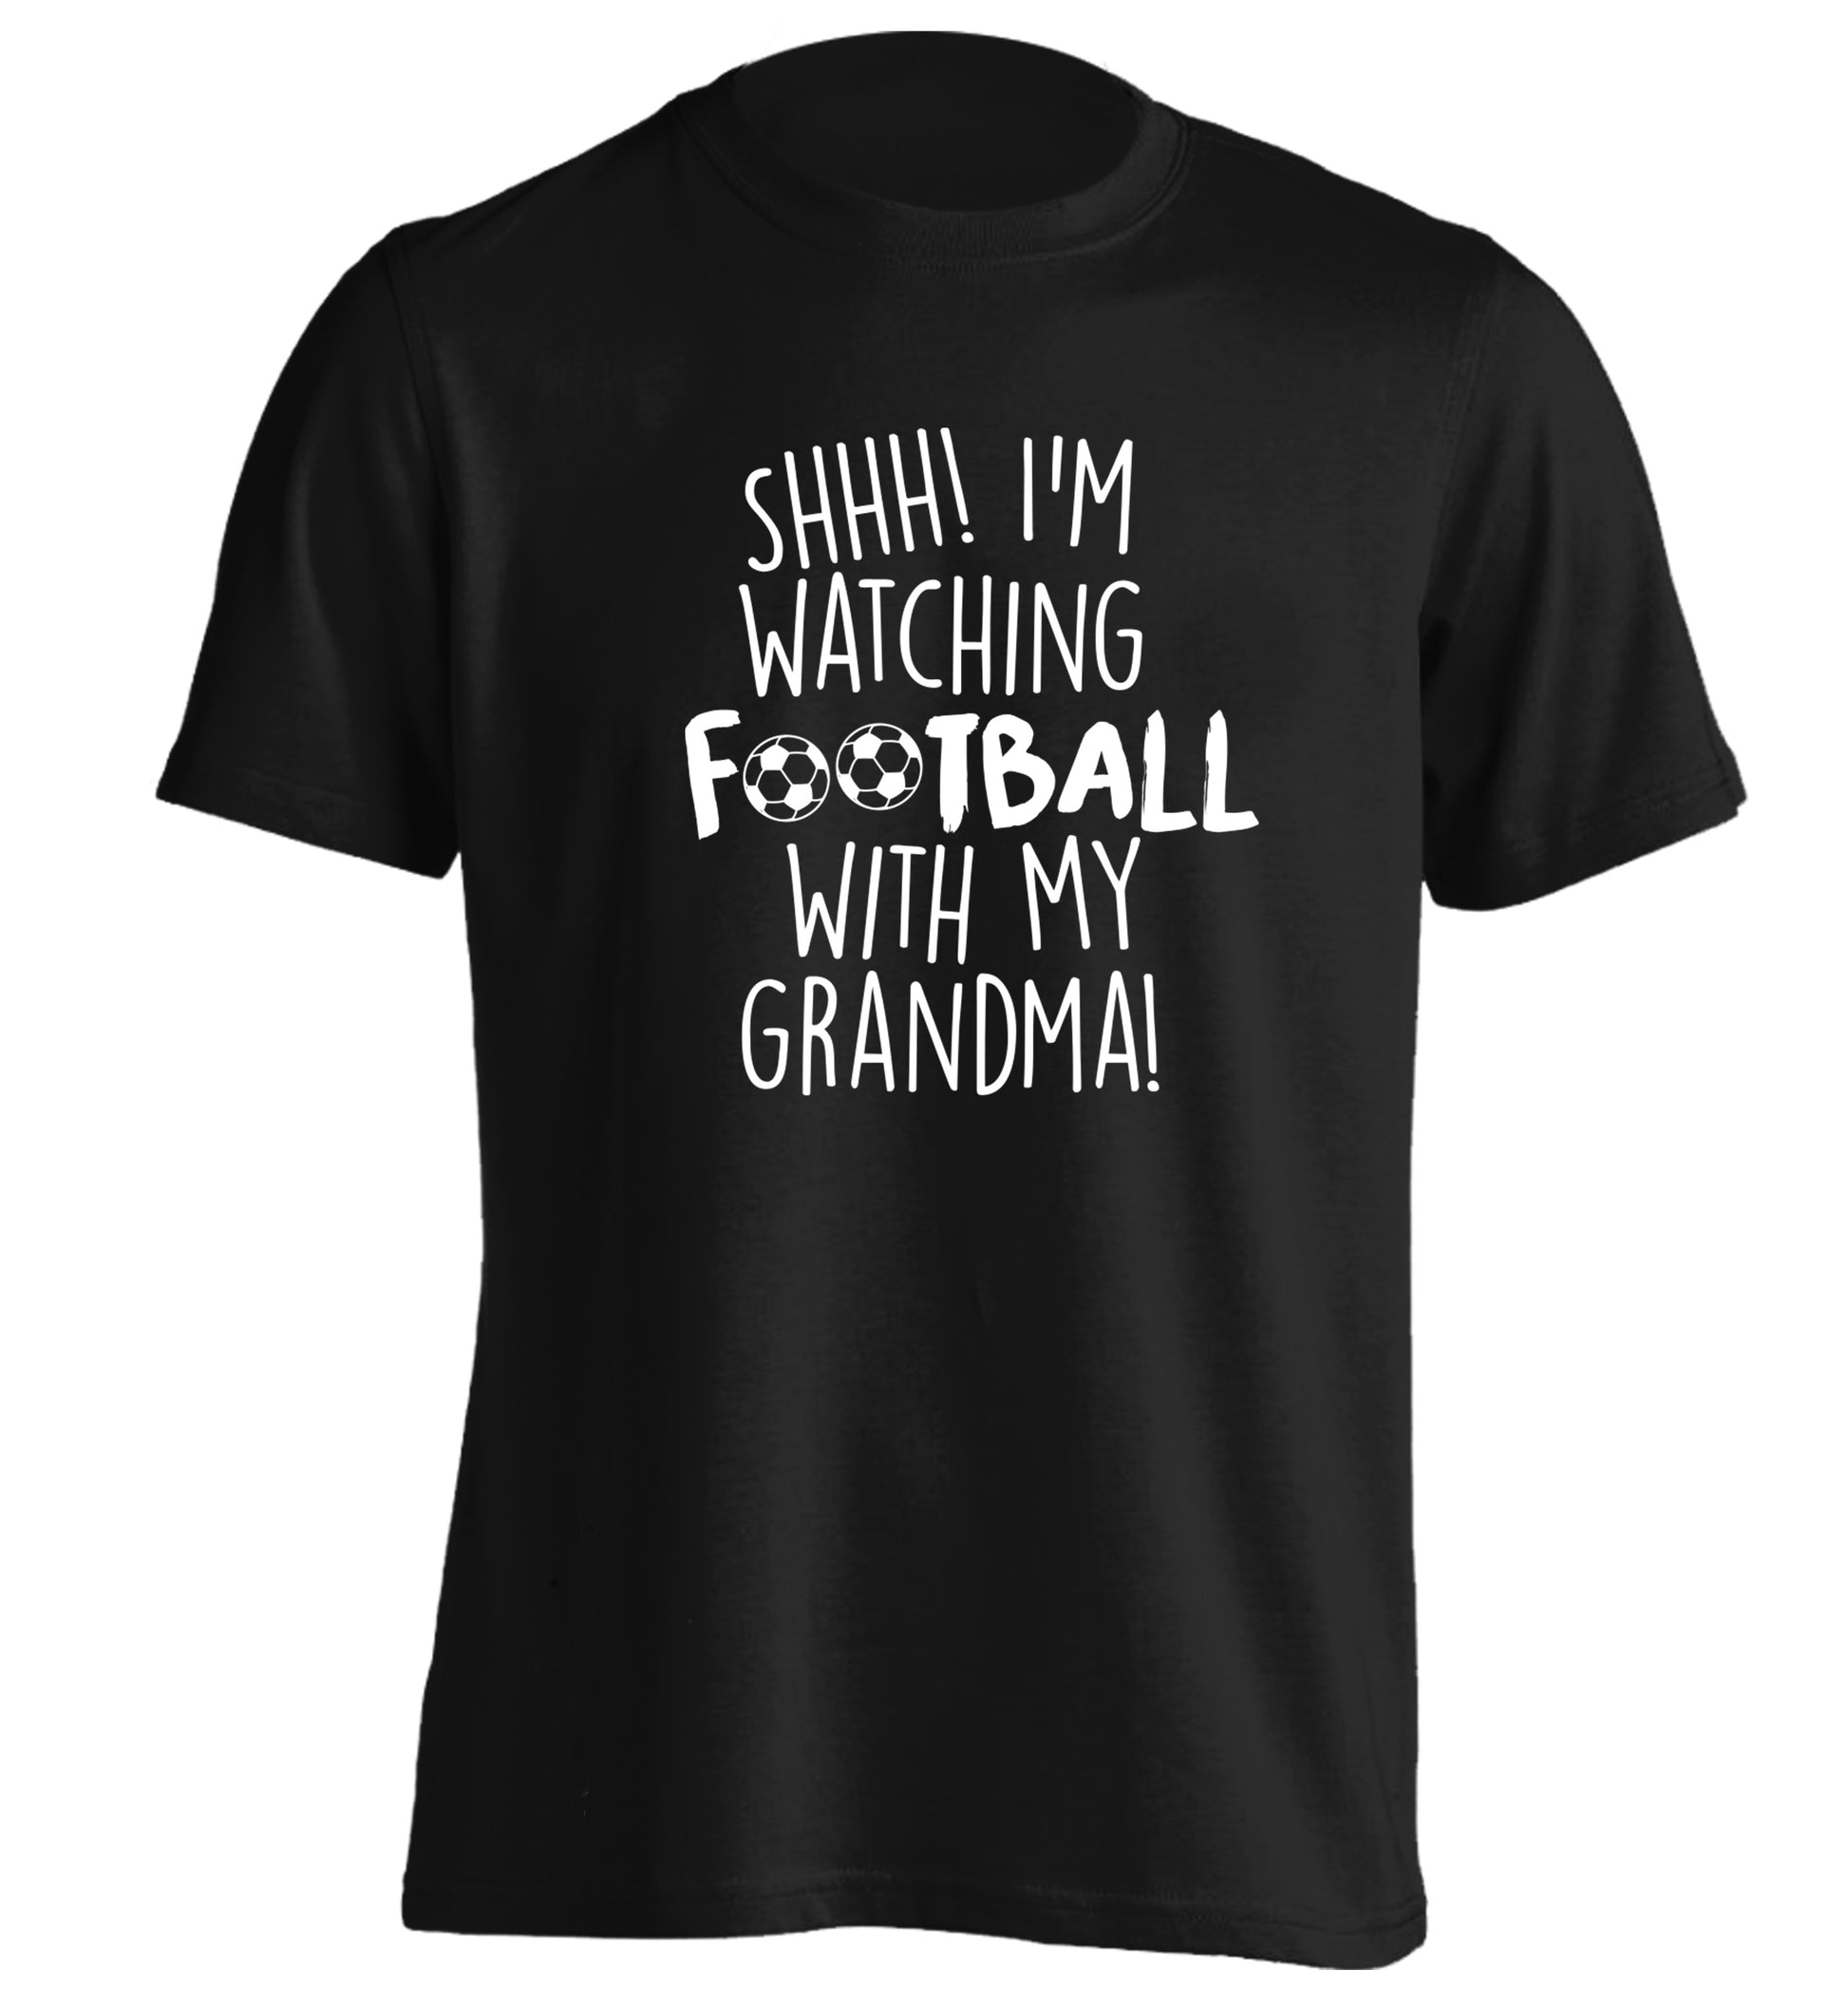 Shhh I'm watching football with my grandma adults unisexblack Tshirt 2XL